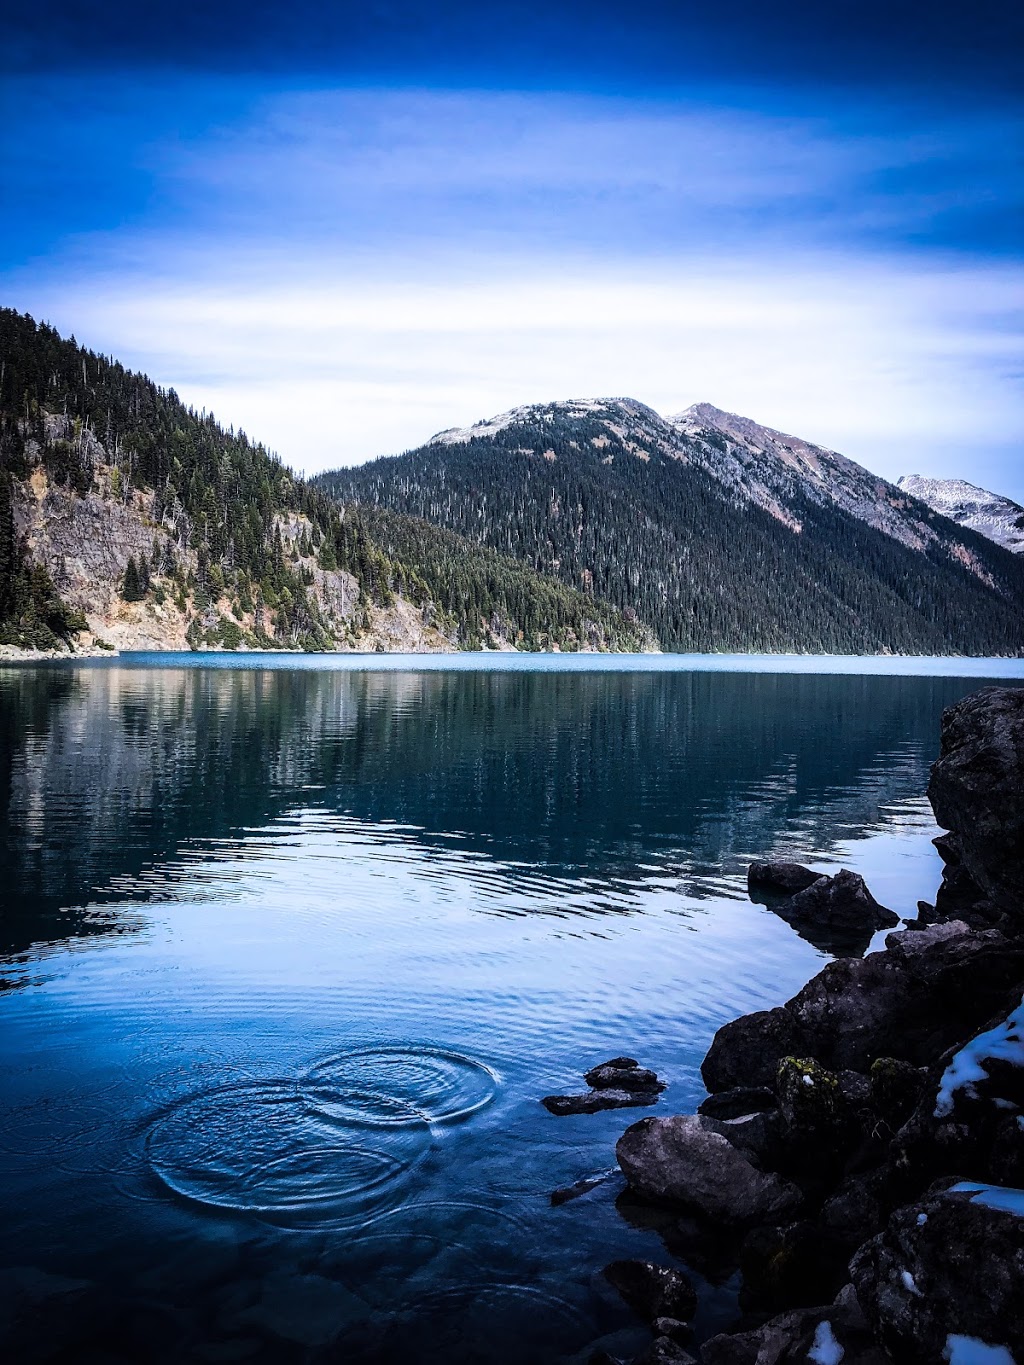 Garibaldi Lake | 0P6, Sea-to-Sky Hwy, Squamish, BC V8B 0P6, Canada